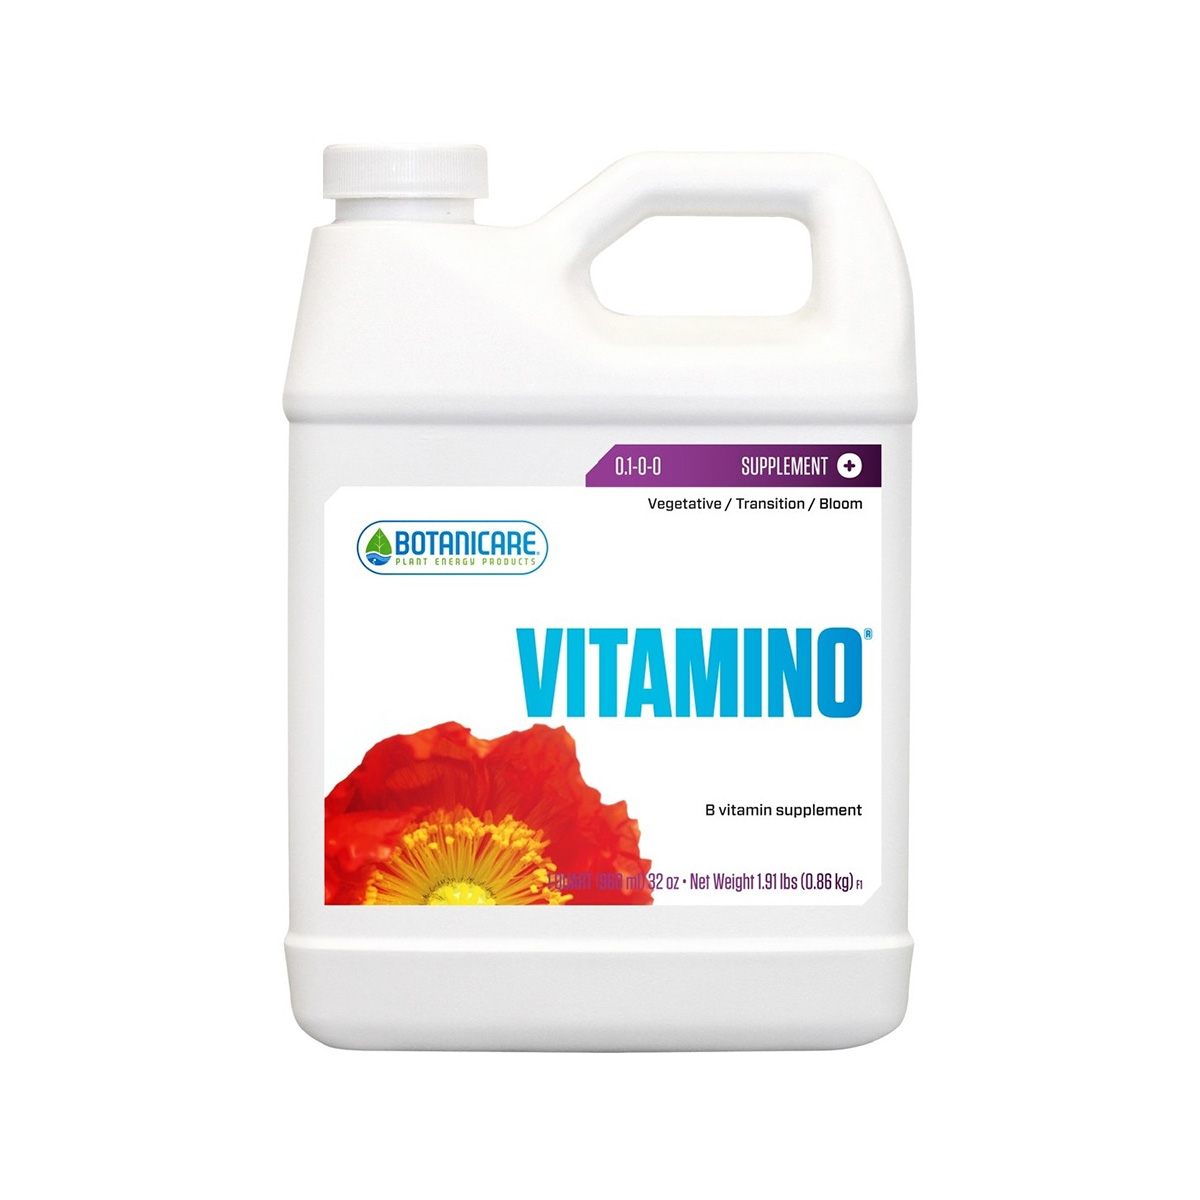 Botanicare Vitamino Quart